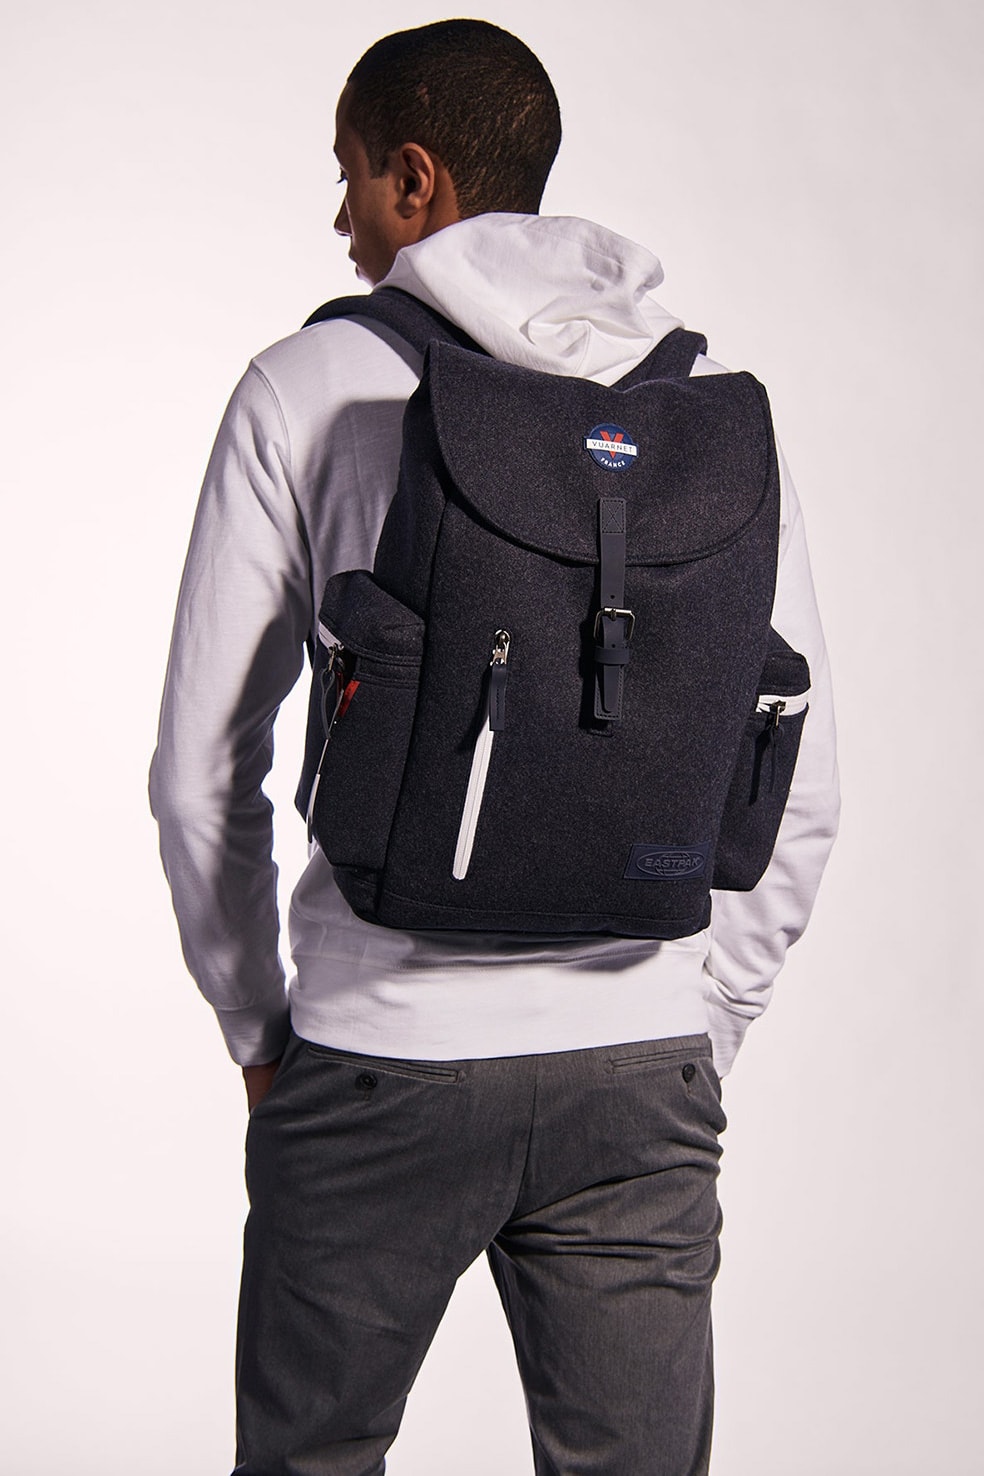 Eastpak Vuarnet Collaborative Backpack Sunglasses Bags